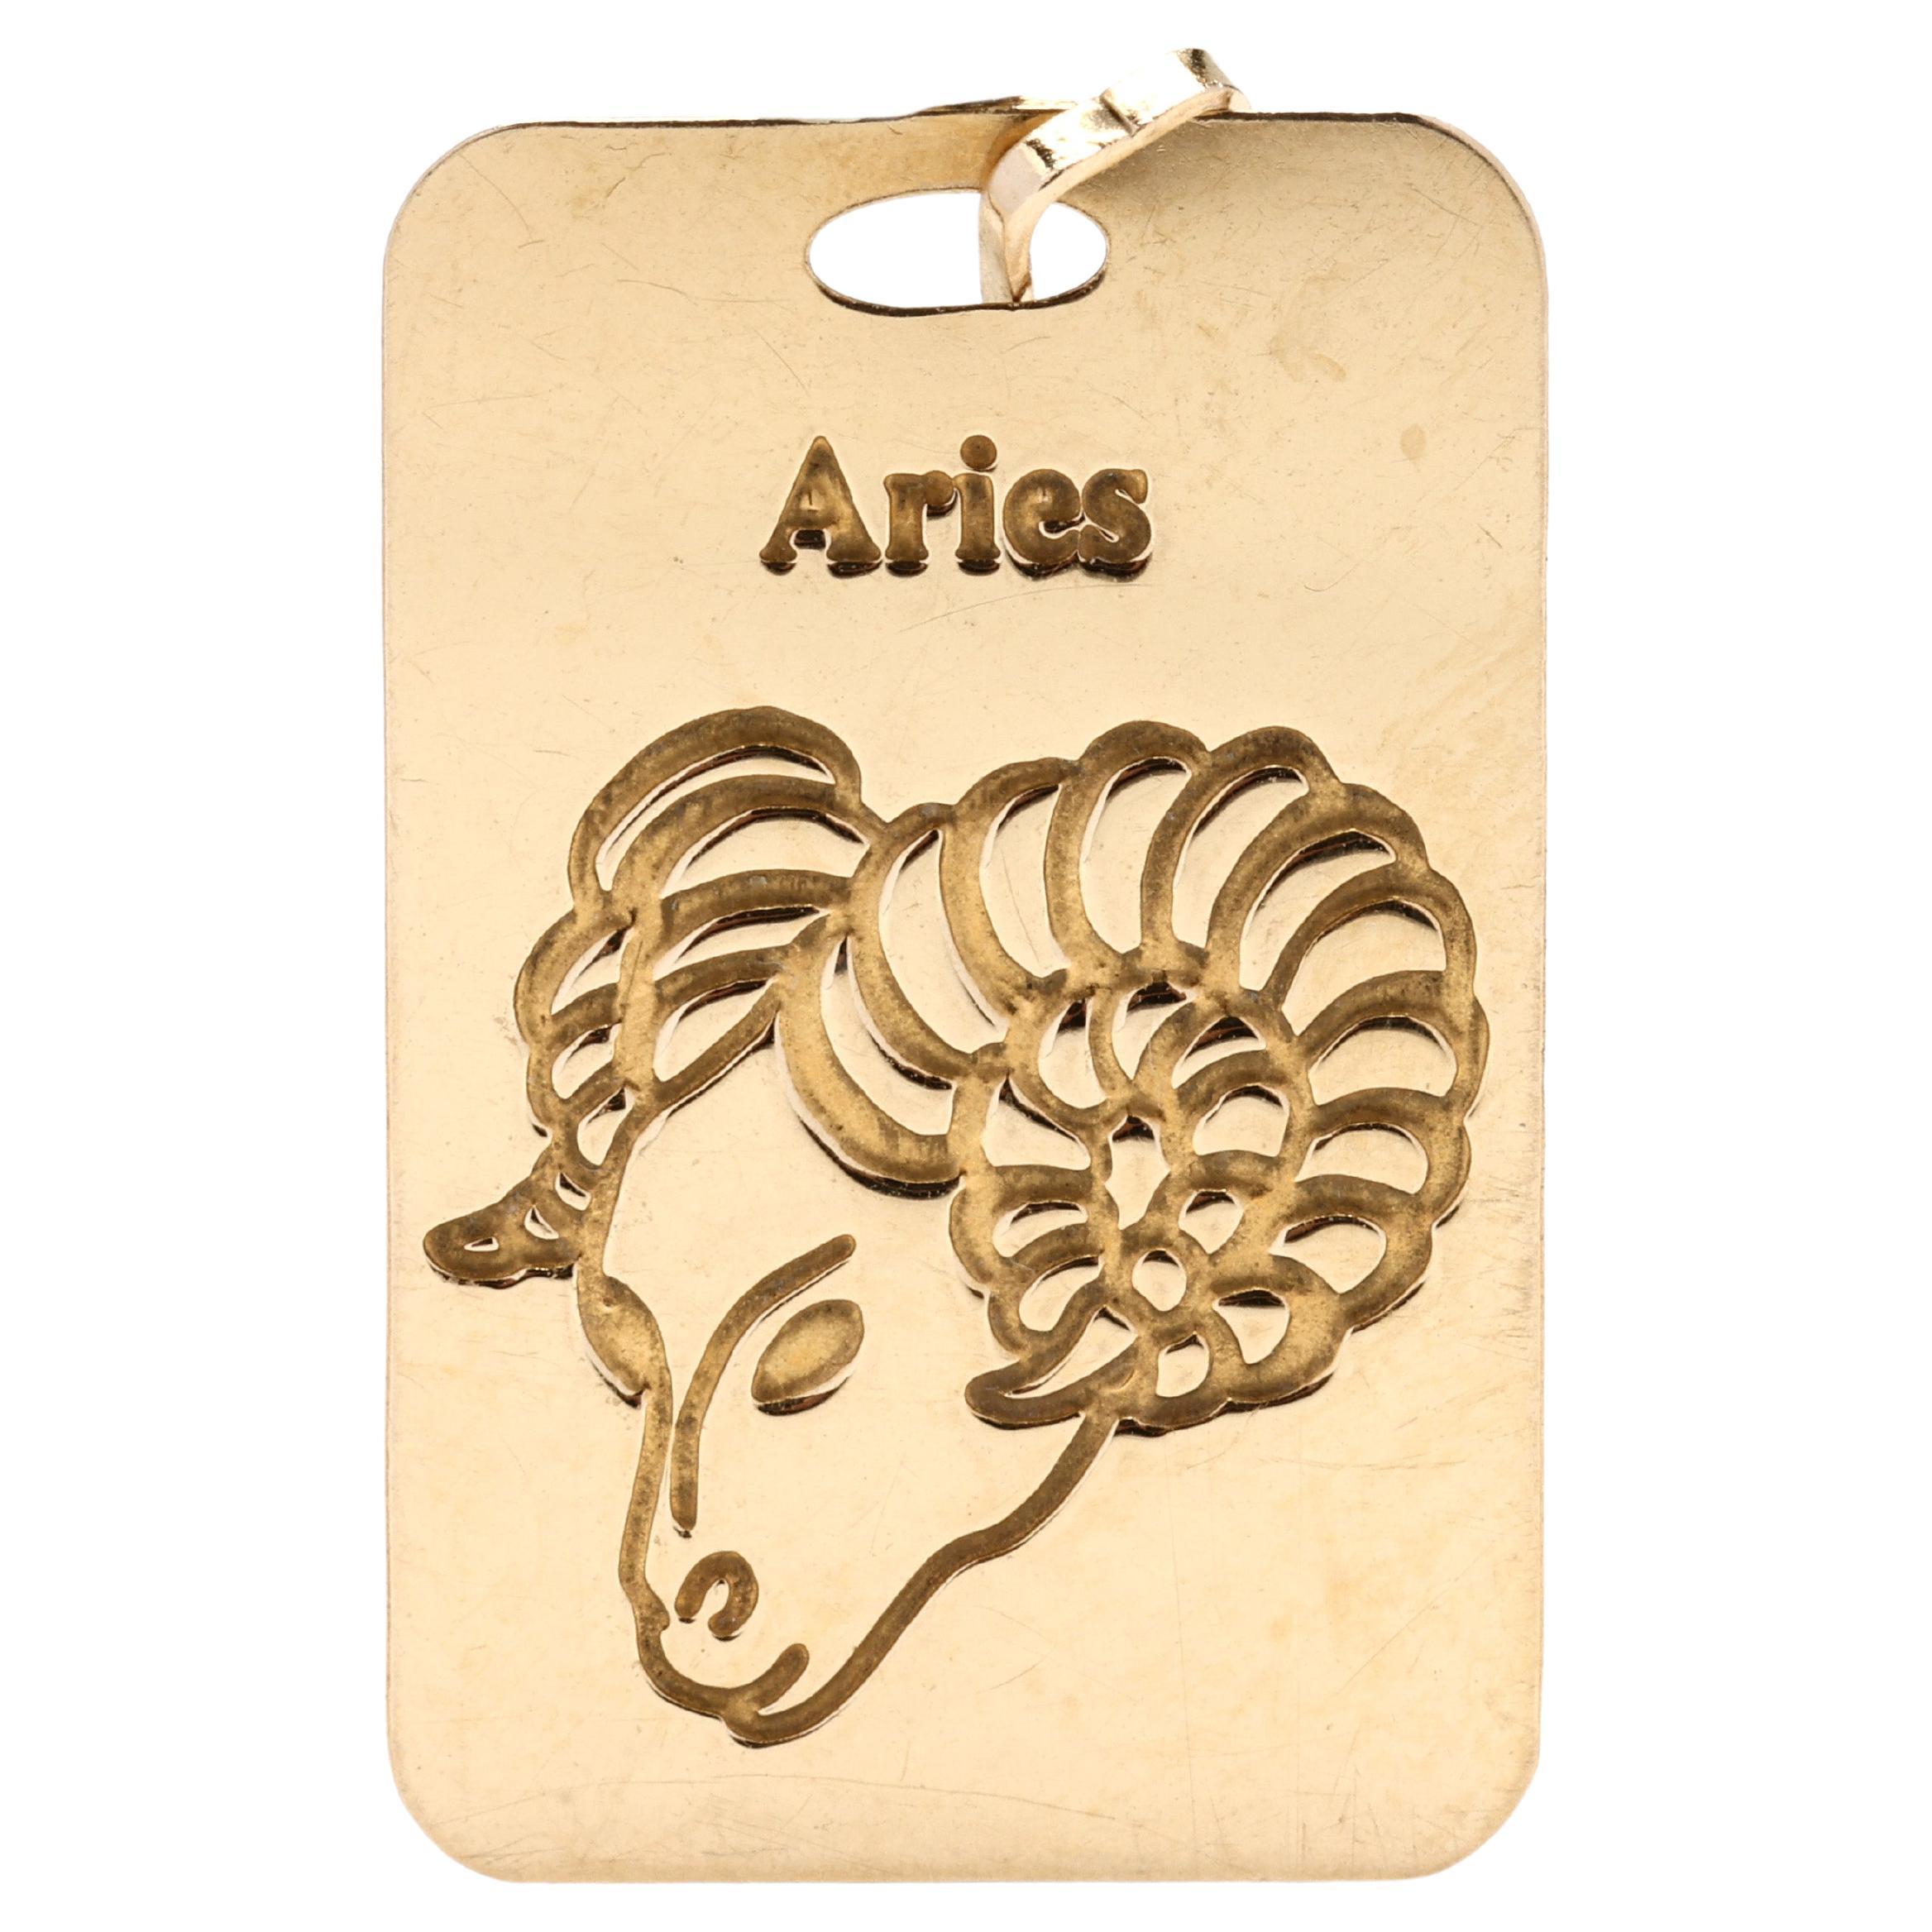 Aries Ram Gold Charm, 14k Yellow Gold, Horoscope Pendant, Length 1 Inch